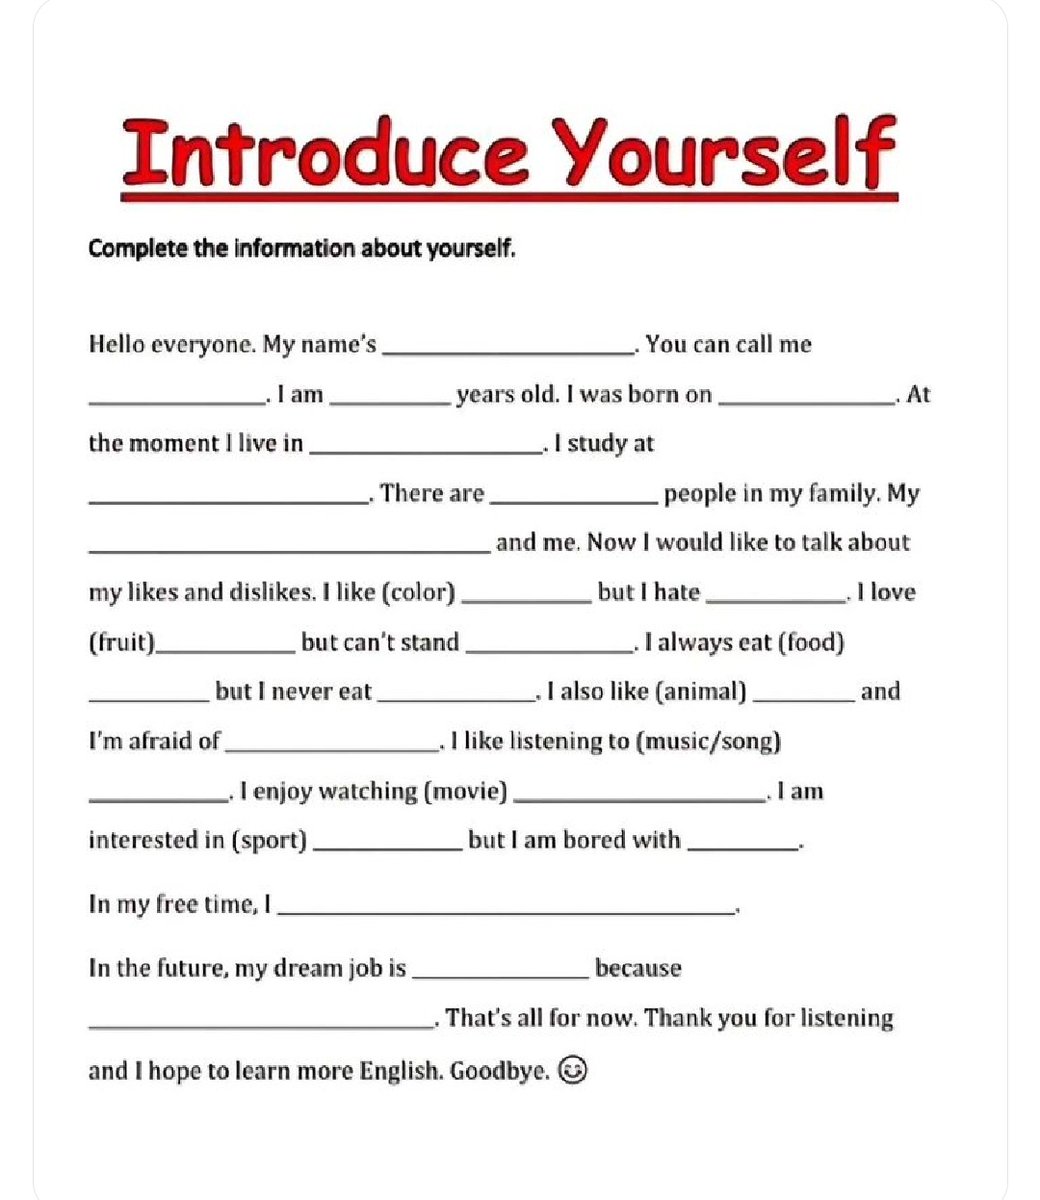 Introduce yourself.